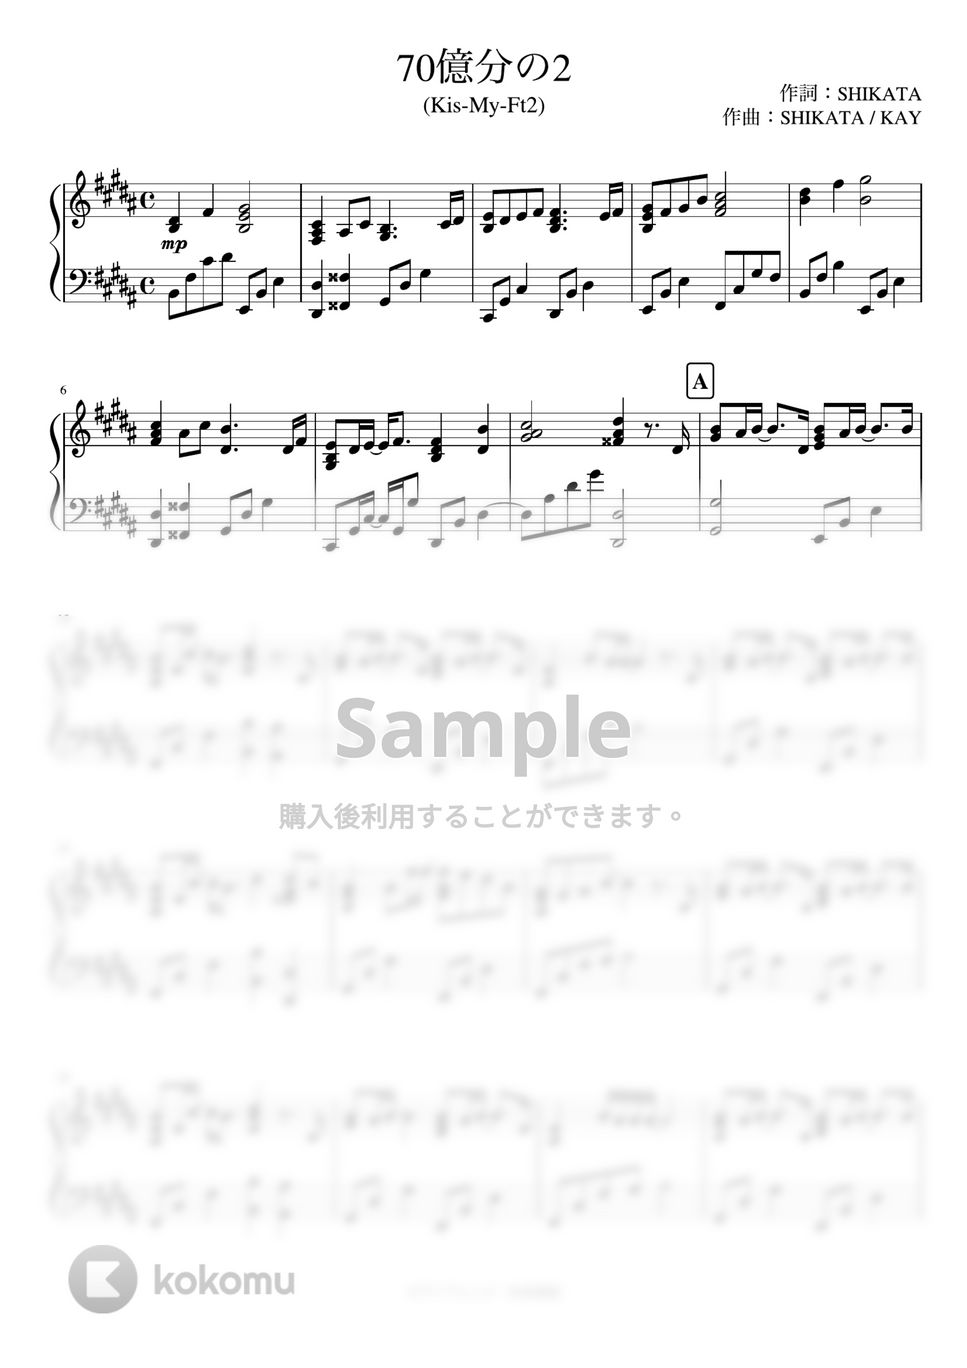 Kis-My-Ft2 - 70億分の2 (ピアノソロ) by あきのピアノ演奏